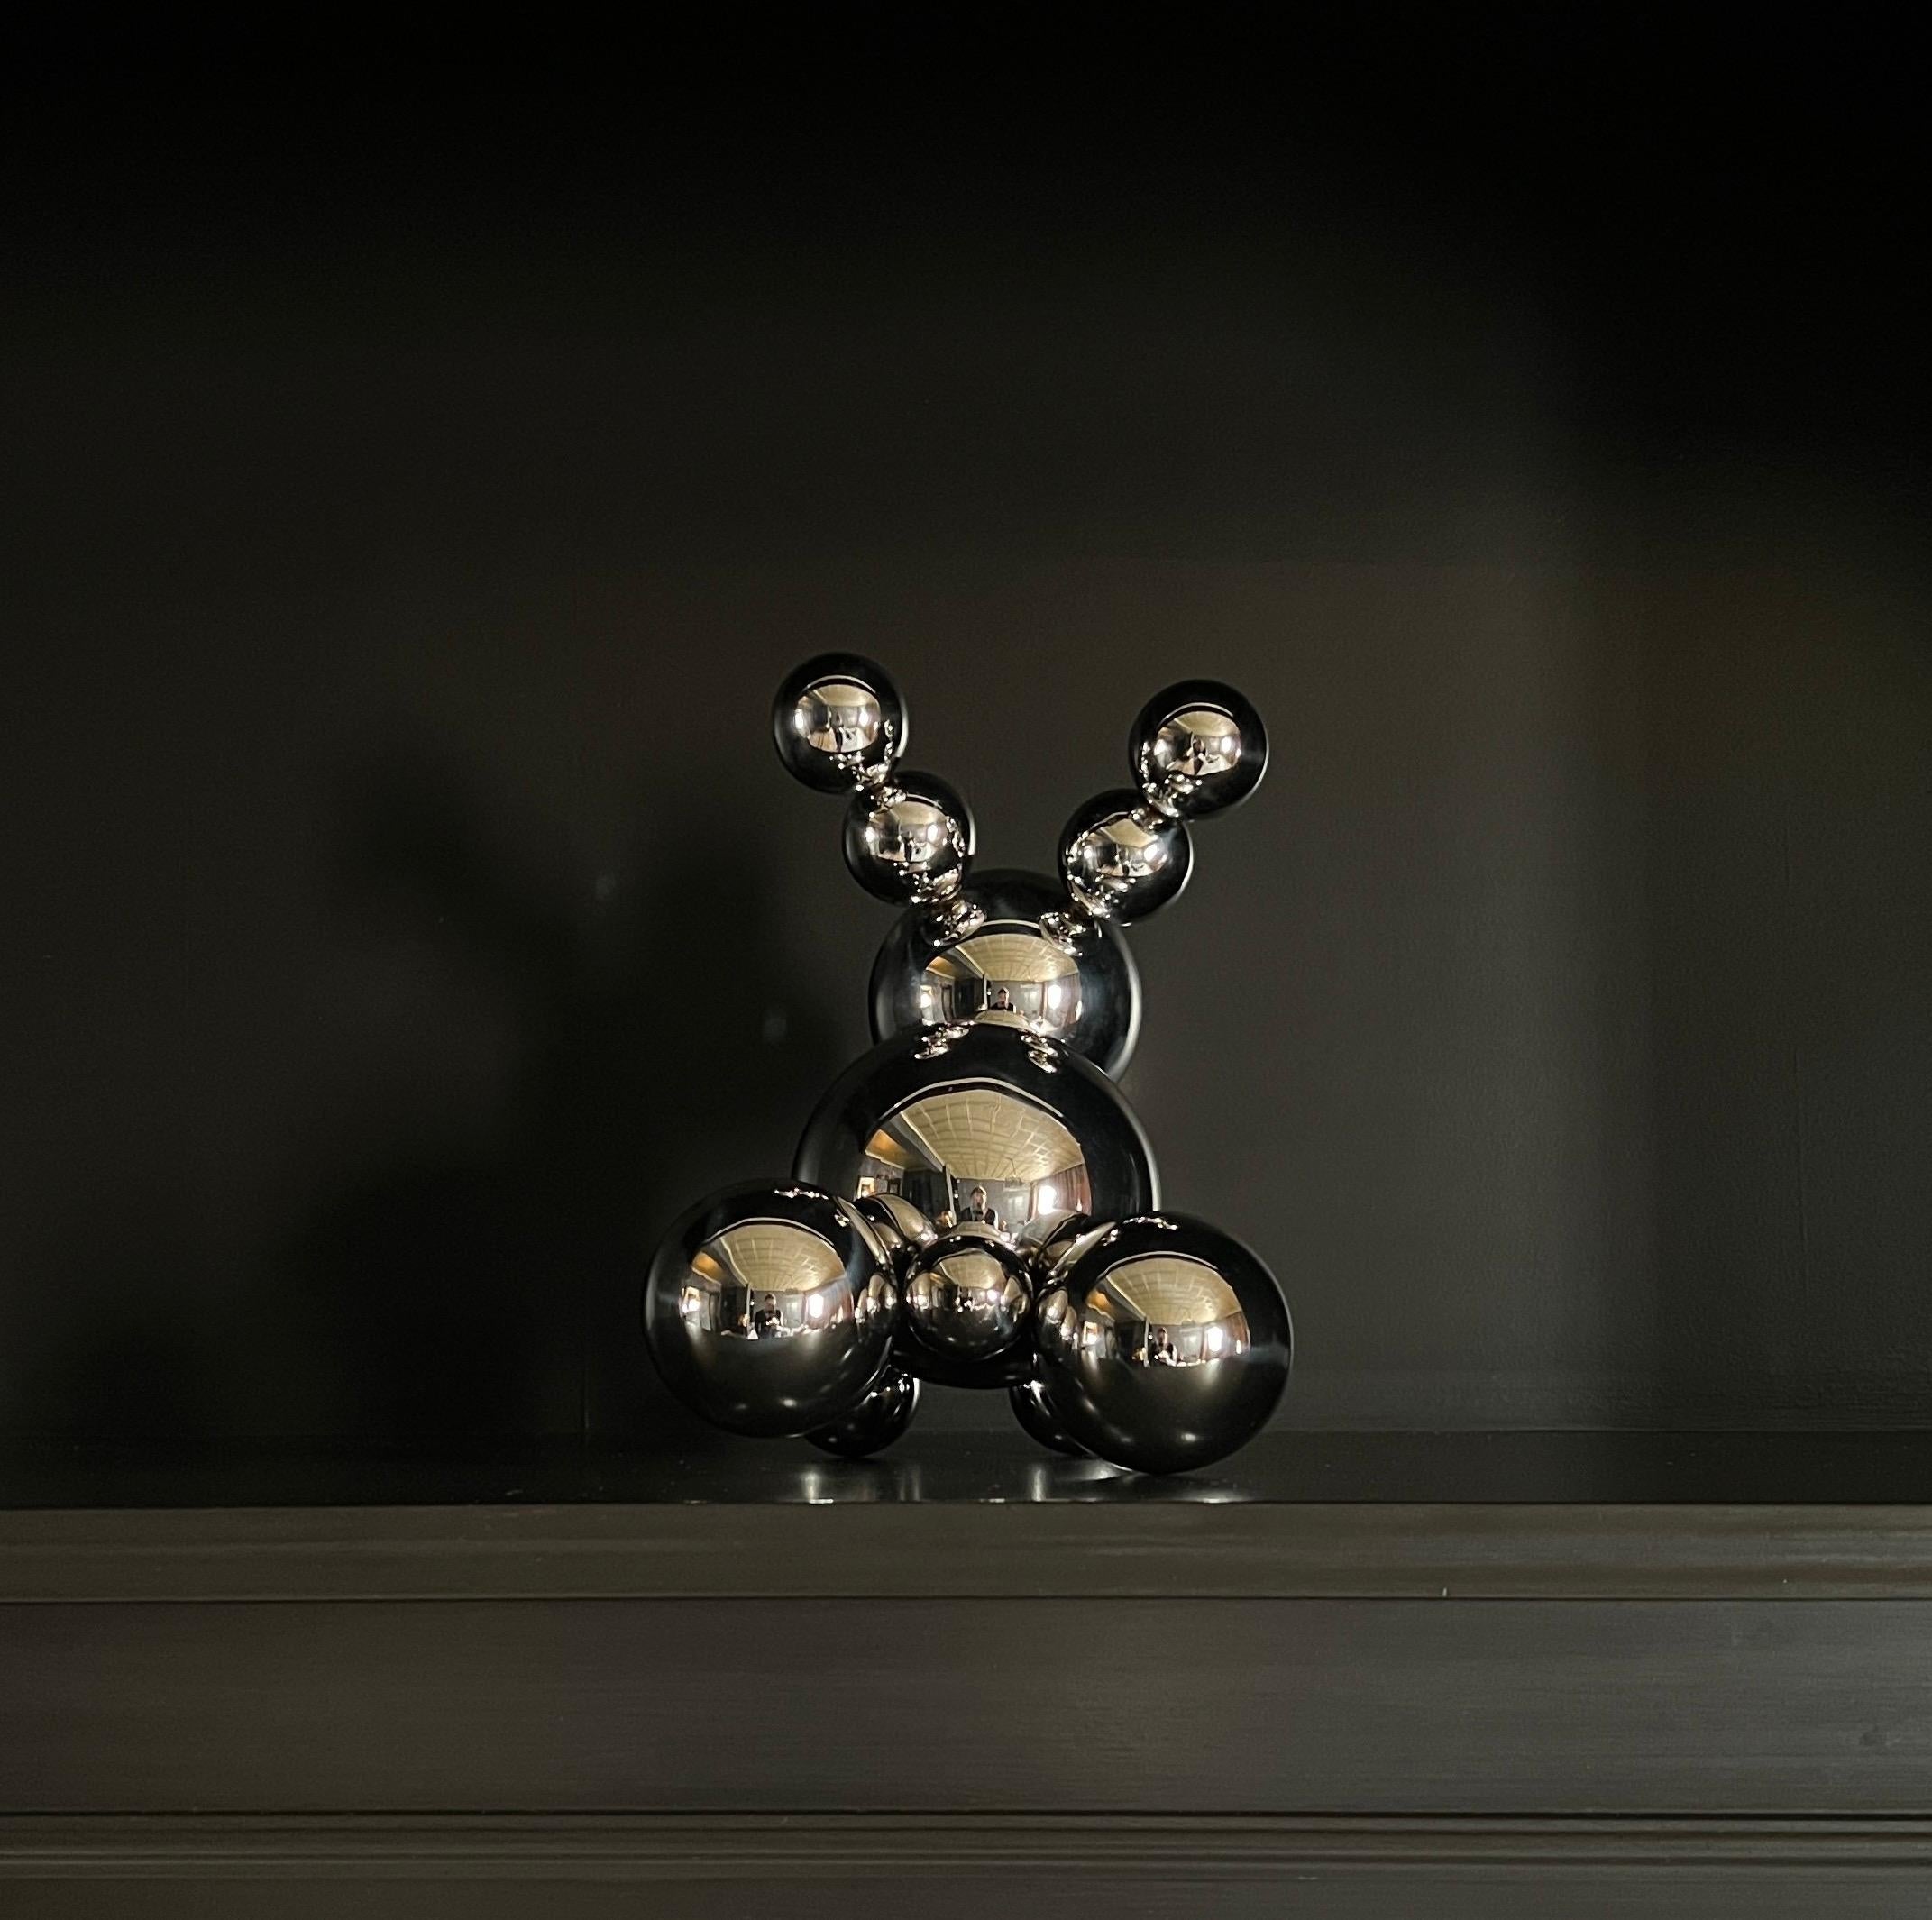 Stainless Steel Rabbit Bunny Robot 'Ears Up!' Minimalistic Art 1